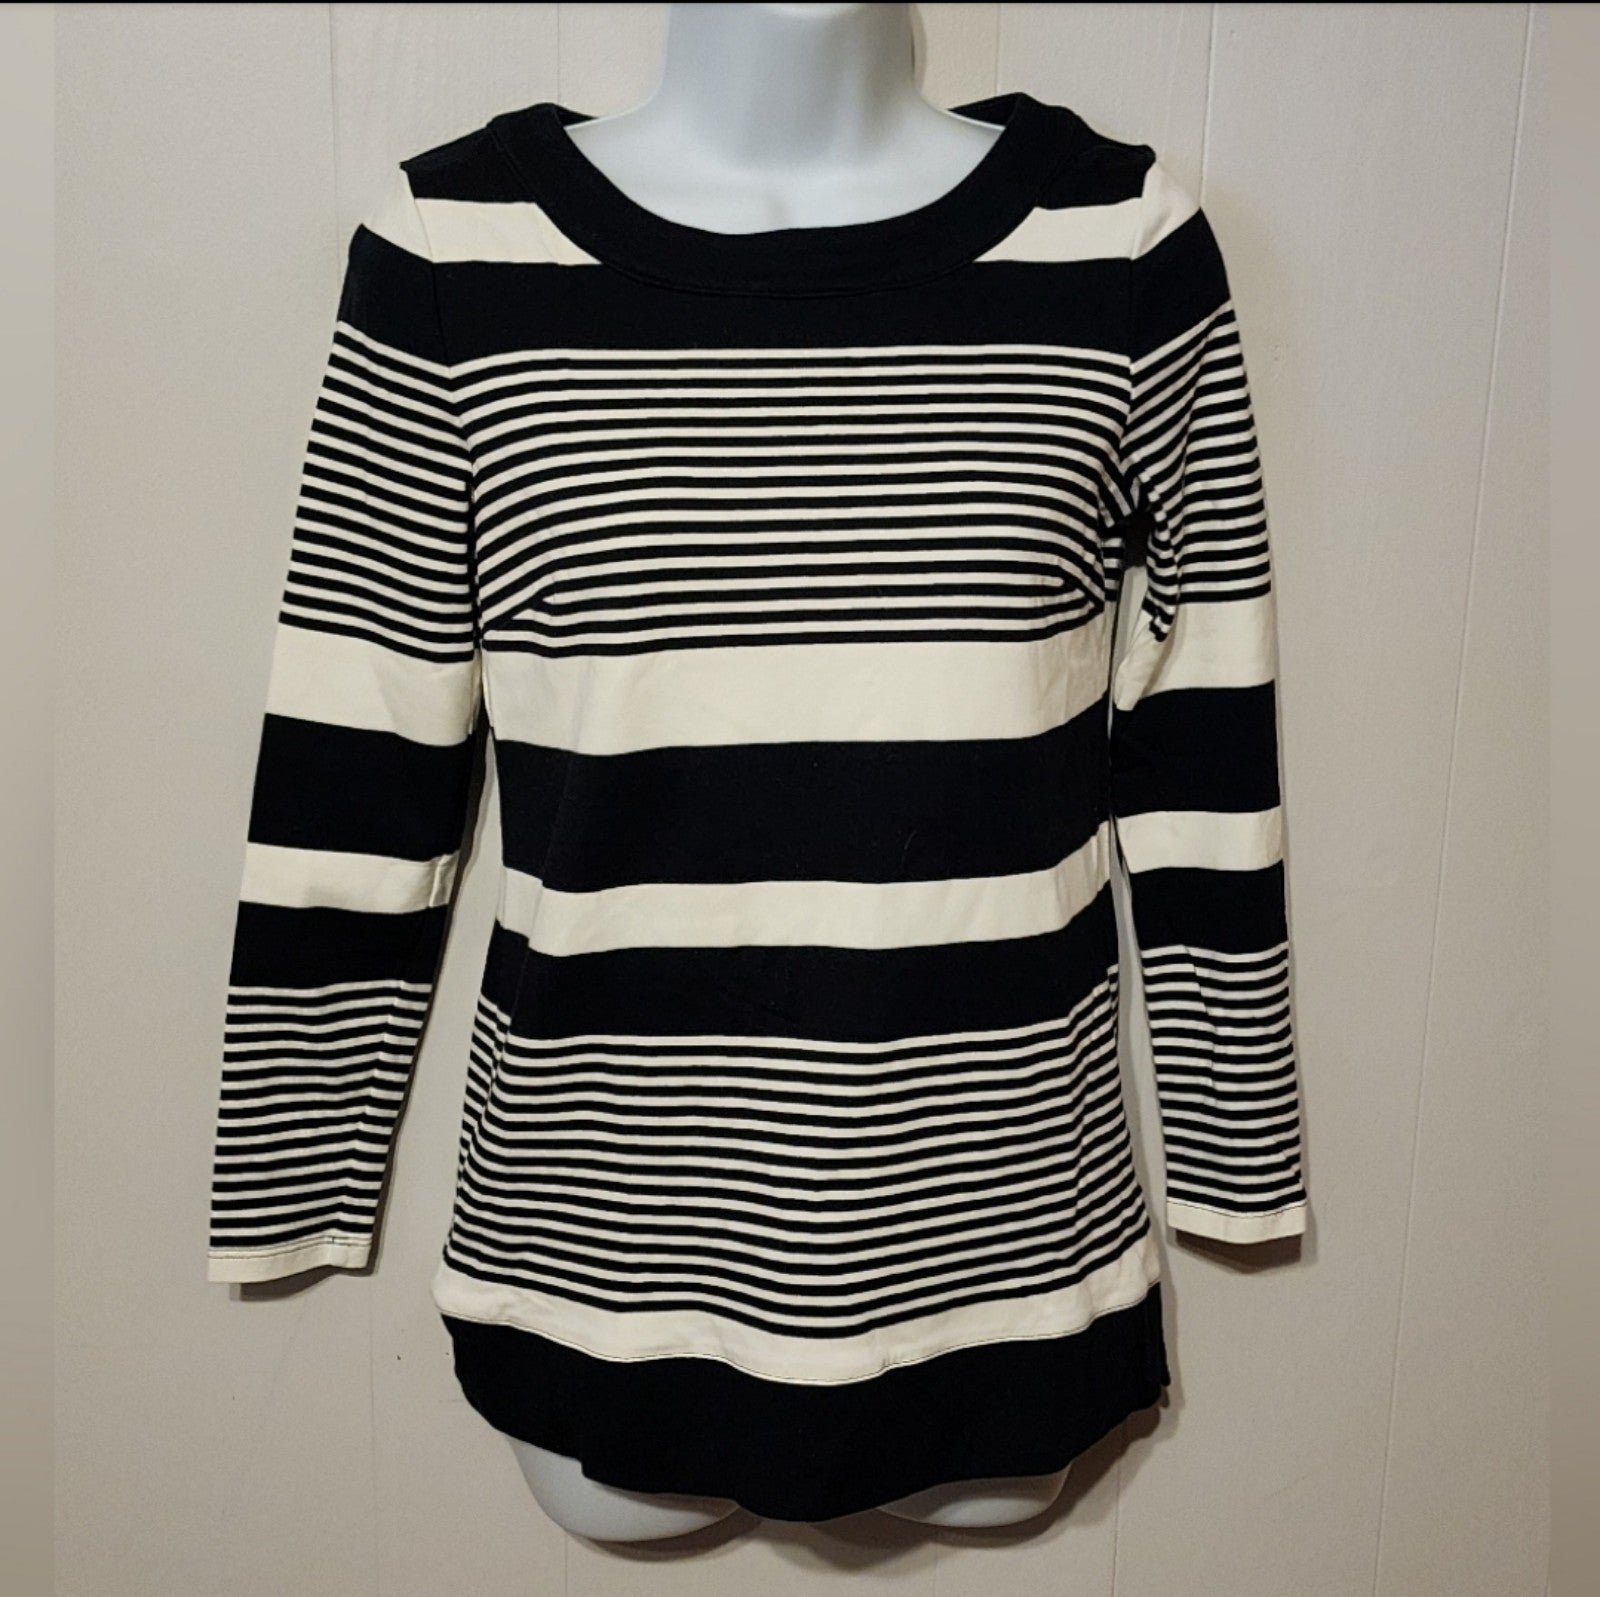 large selection Talbots Sweatshirt Size P Petite Black White Striped Long Sleeve Round Neck B165 M2dv5eBQ6 on sale